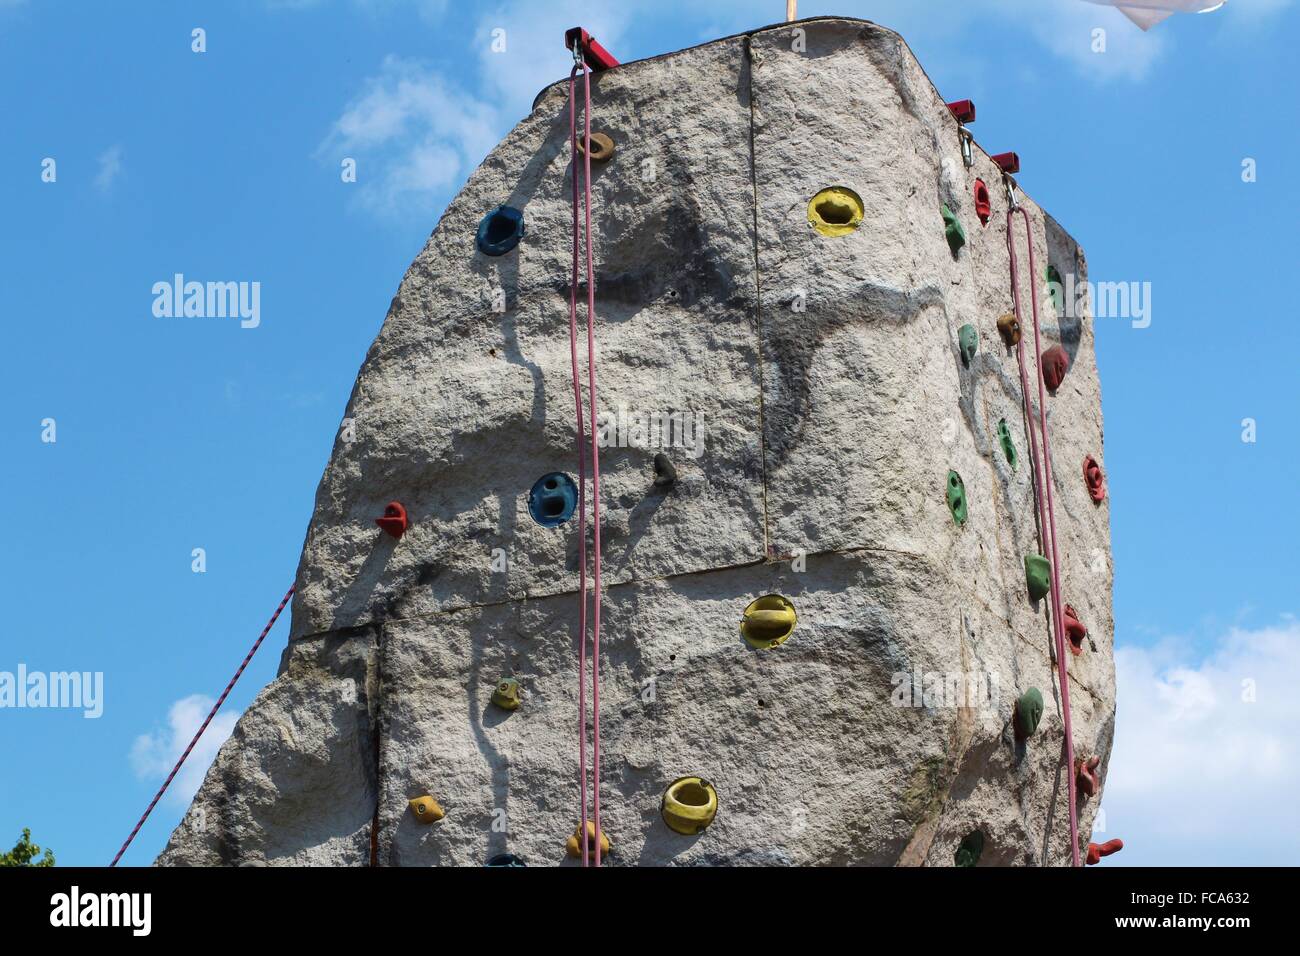 Climbing rock Stock Photo